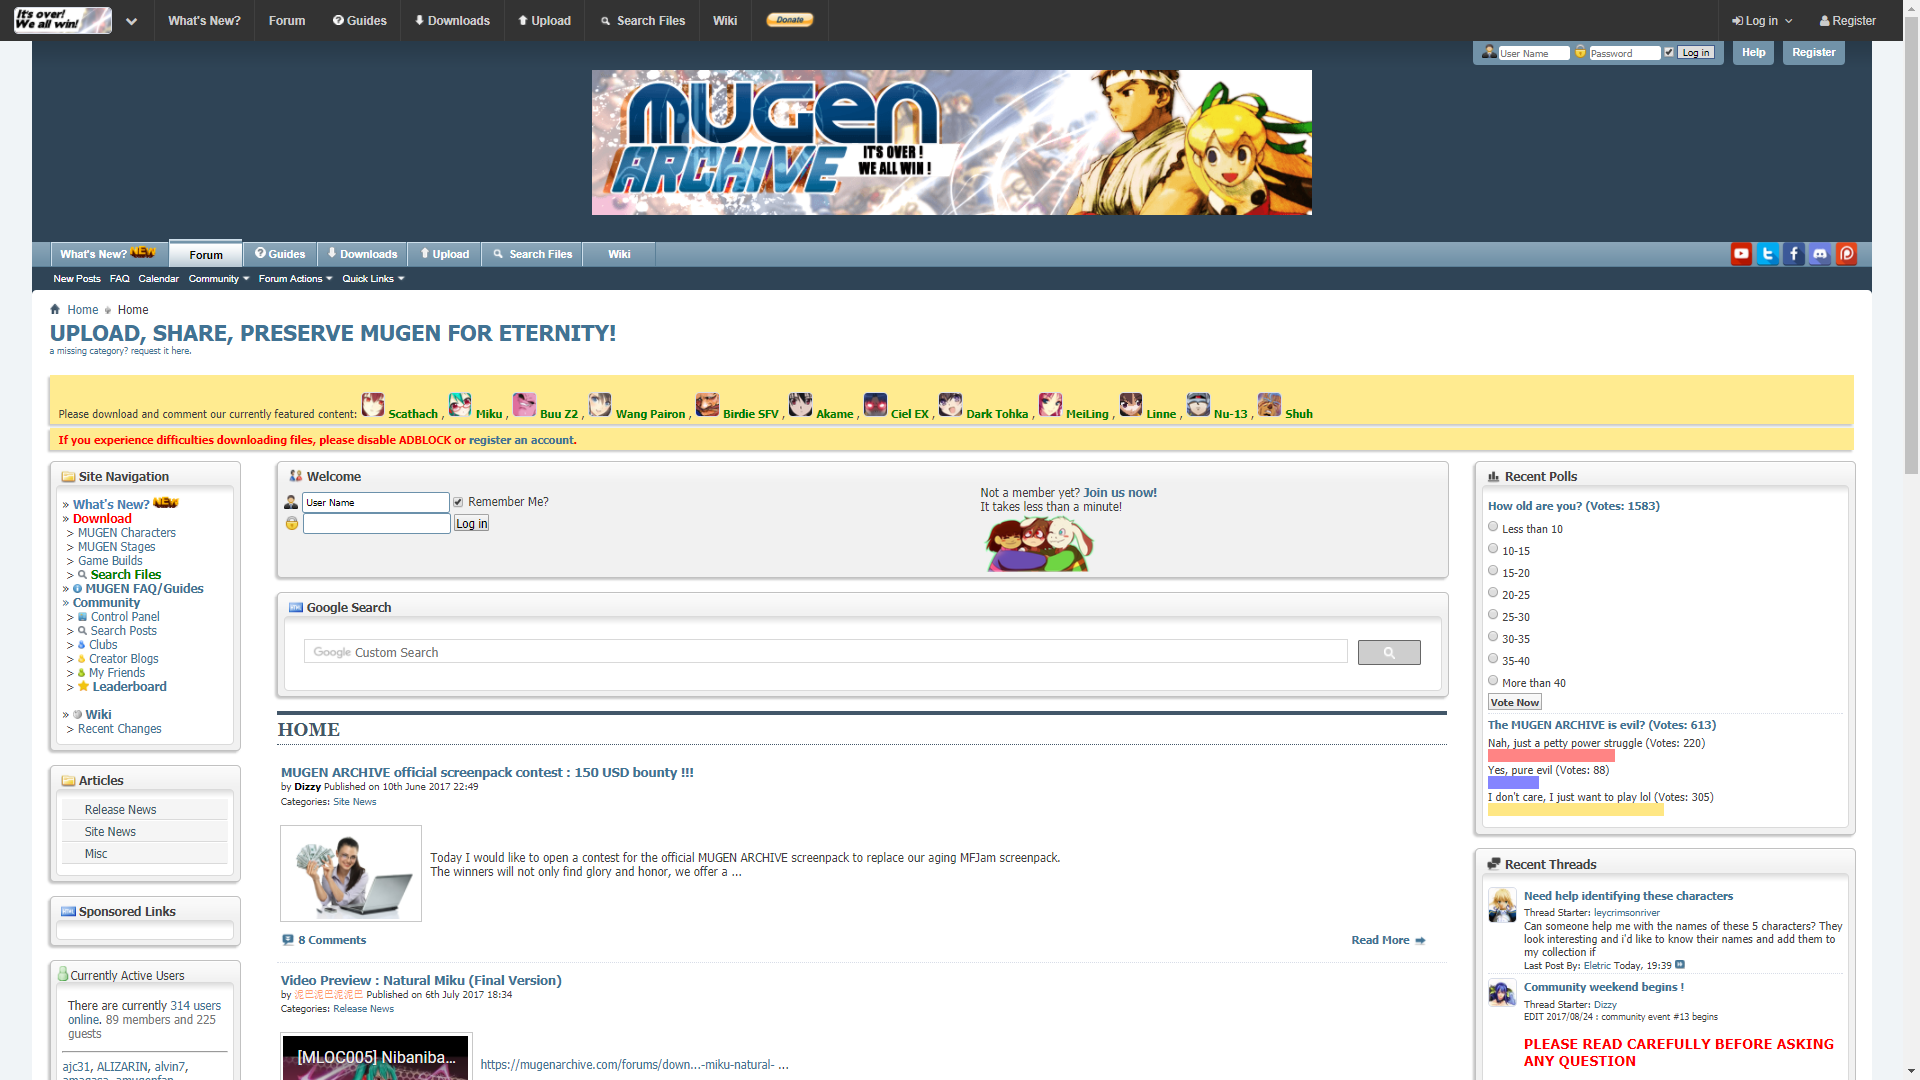 Mugenarchive Reviews  Read Customer Service Reviews of mugenarchive.com